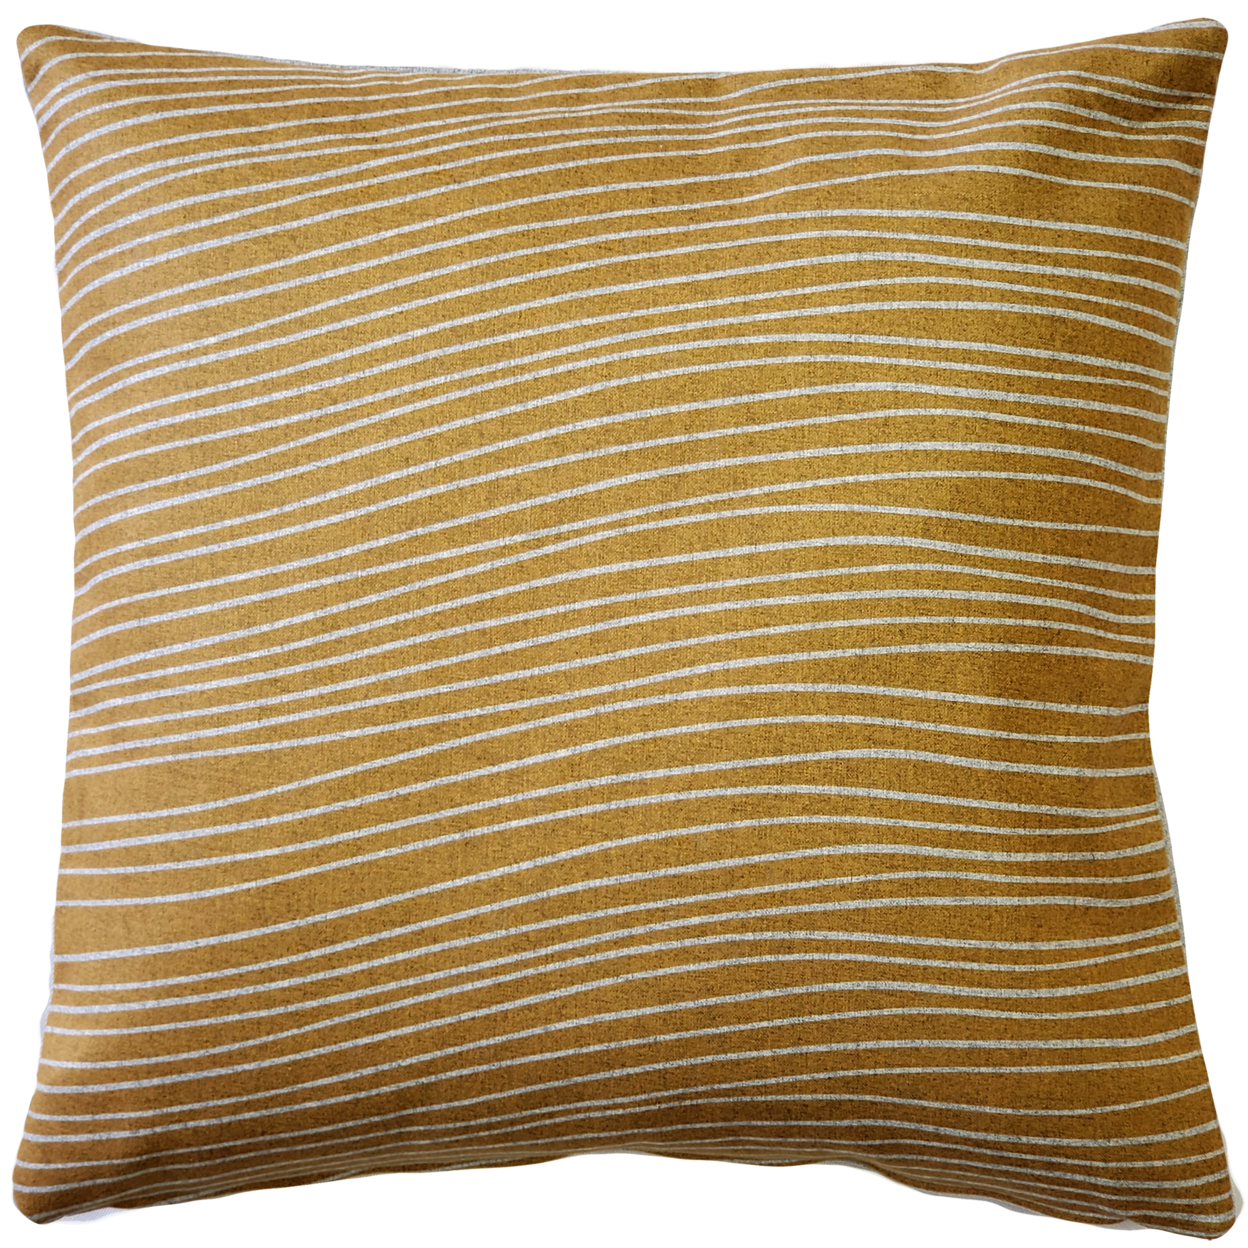 Pillow Dcor Meraki Renaissance Gold Throw Pillow 19x19 Inches Square, Complete Pillow with Polyfill Pillow Insert